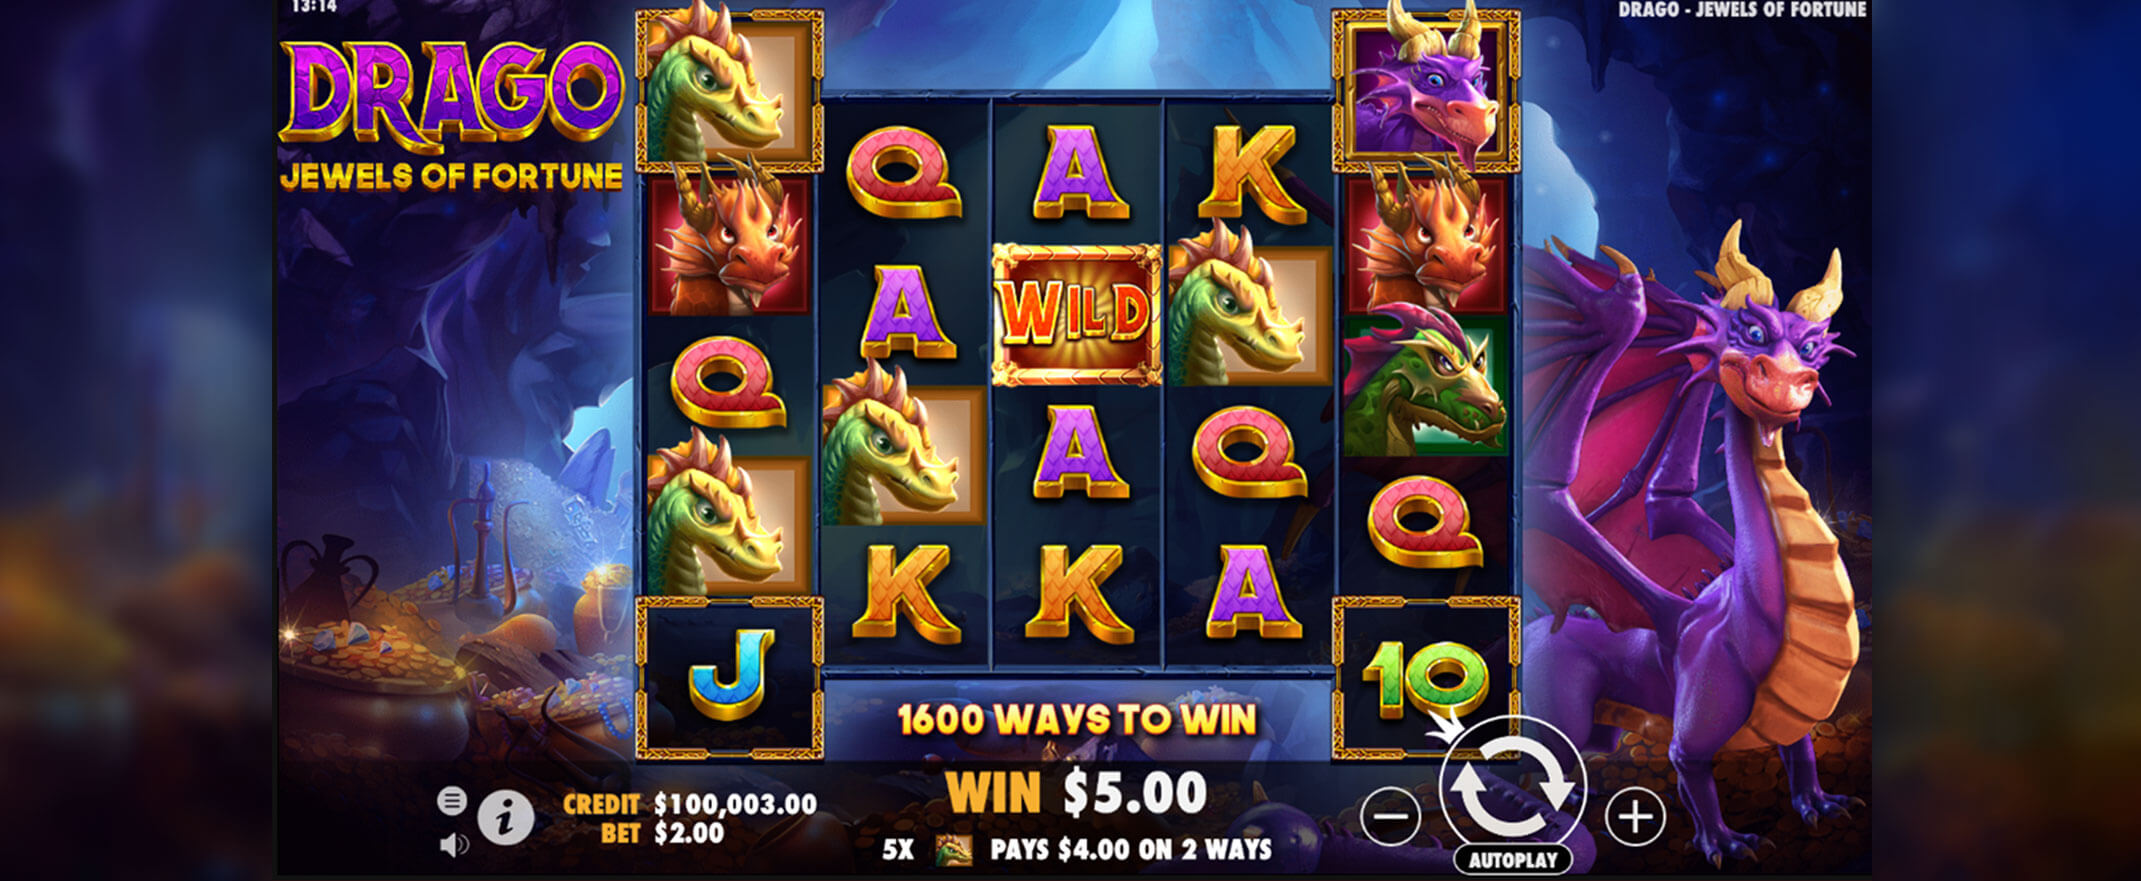 Drago Jewels of Fortune slot screenshot